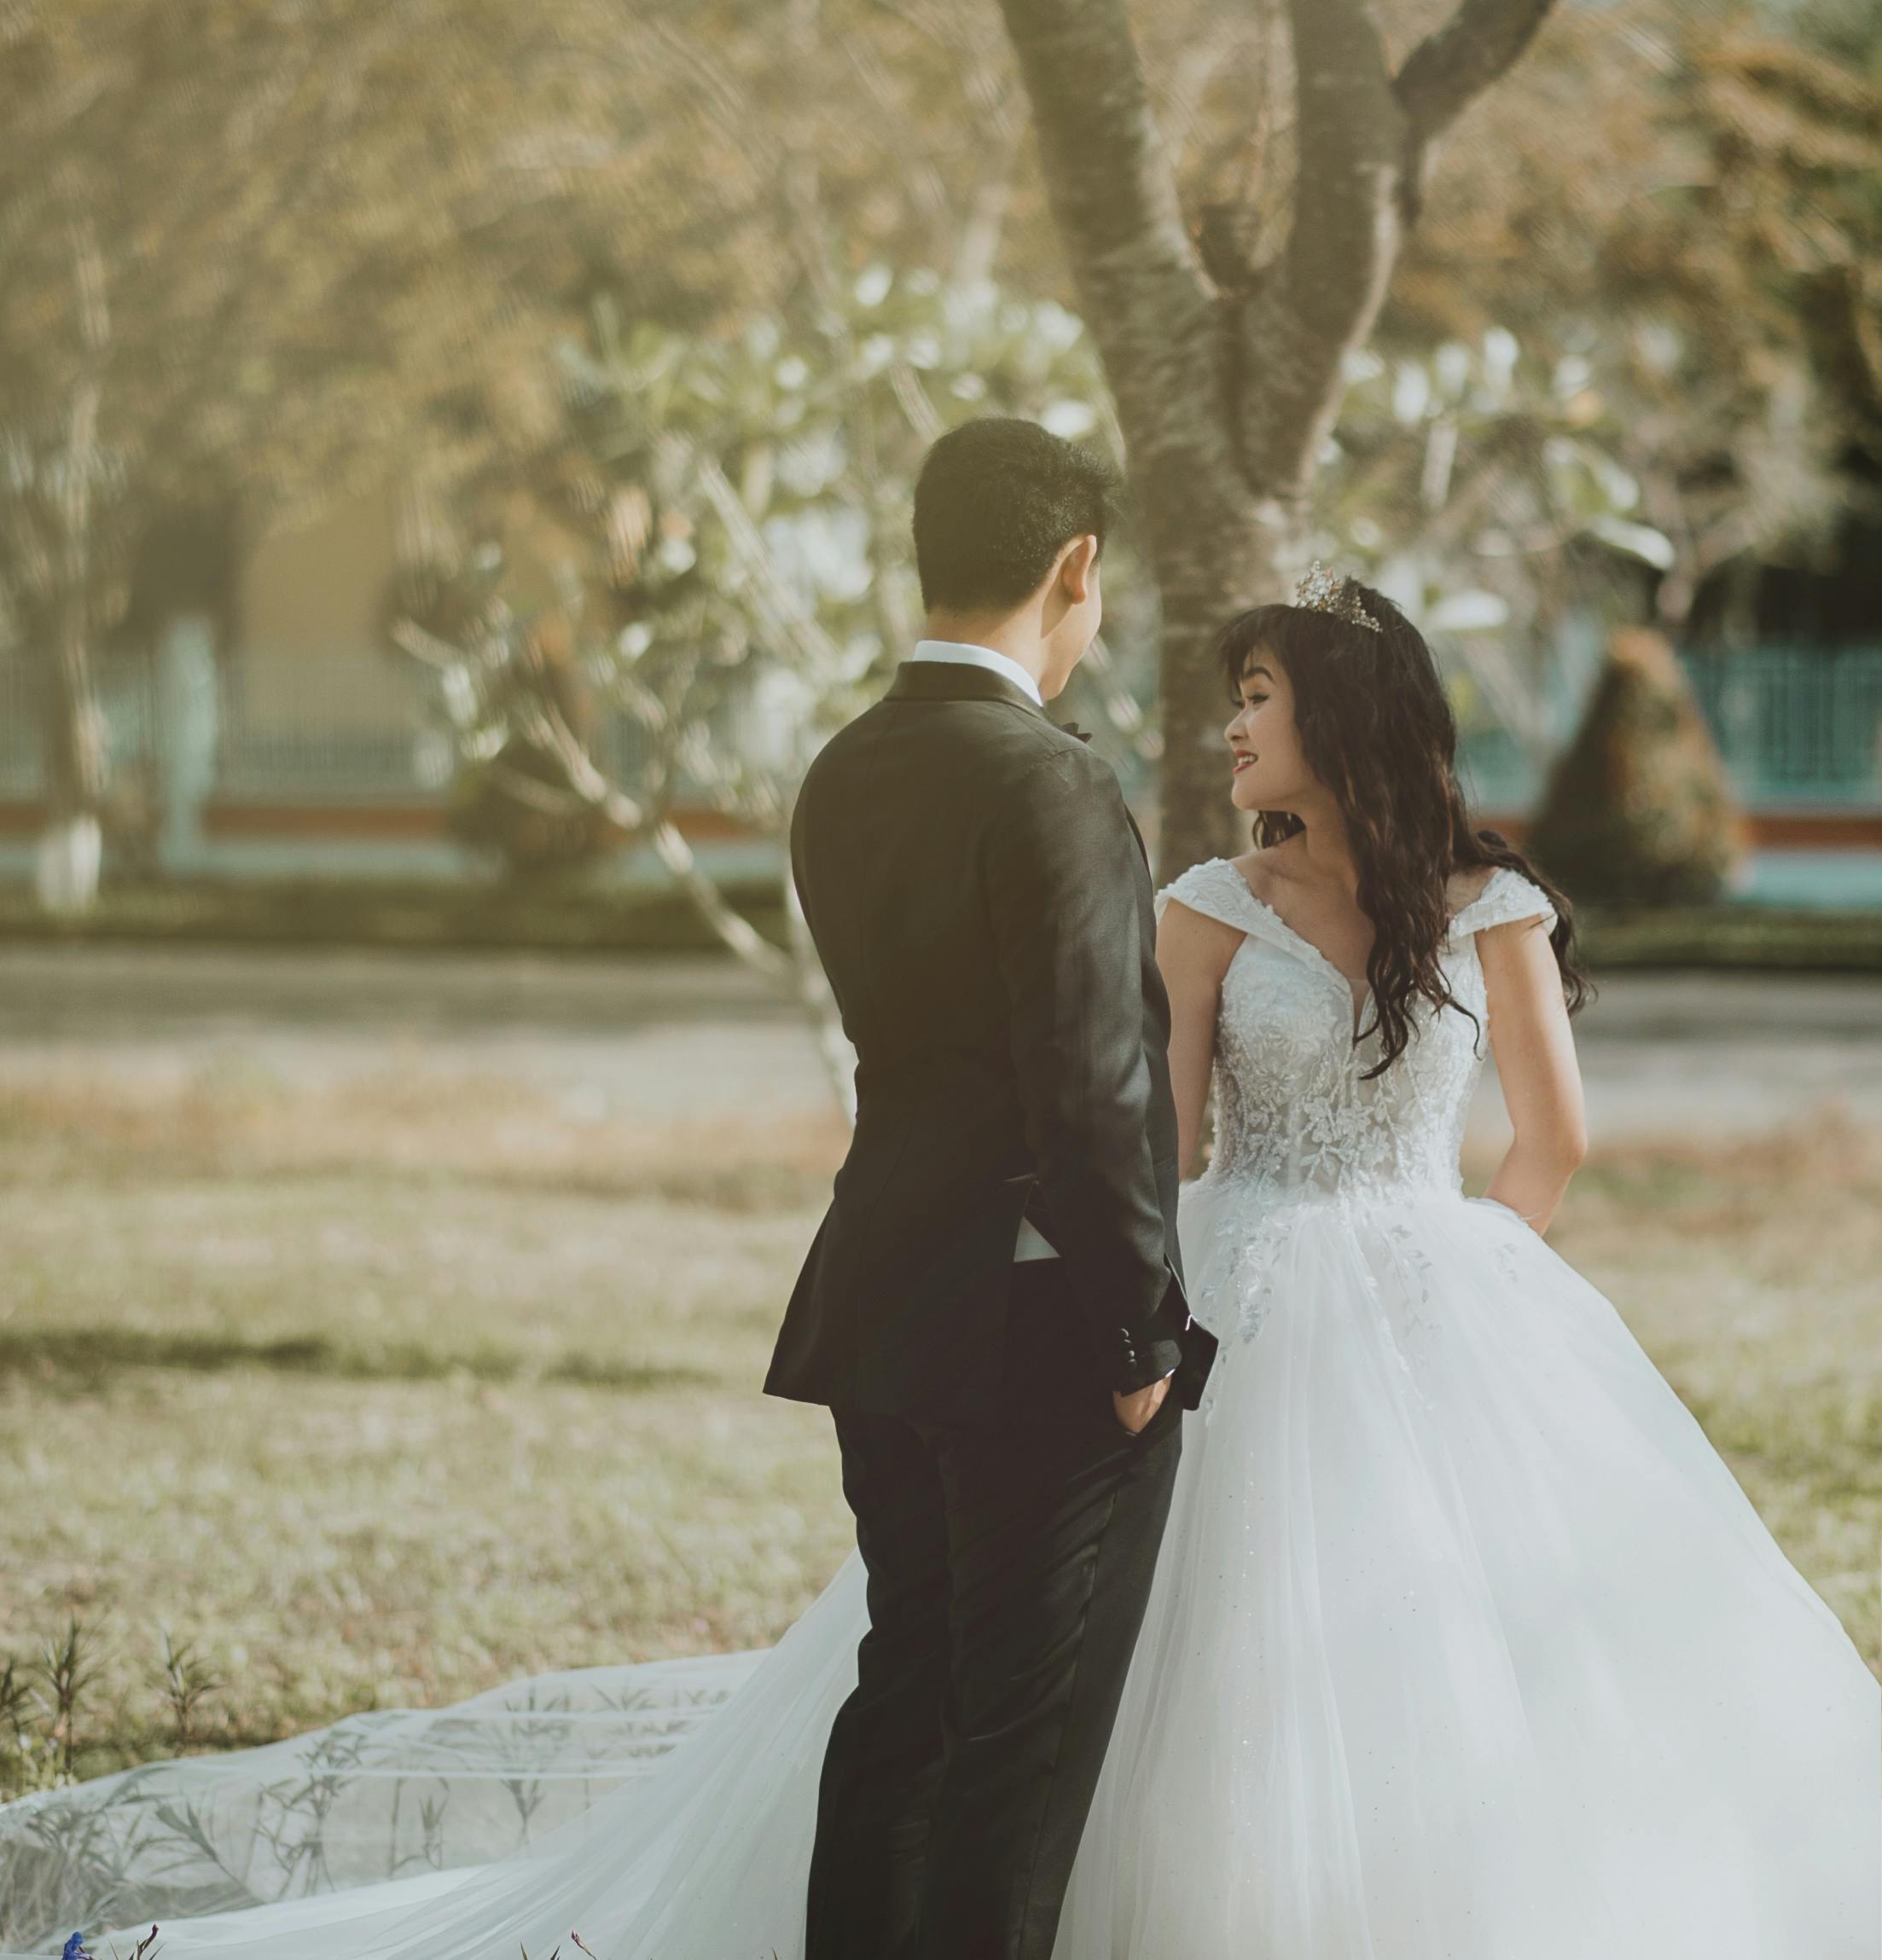 Top 15 Pre Wedding Shoot Dress Ideas [2022]